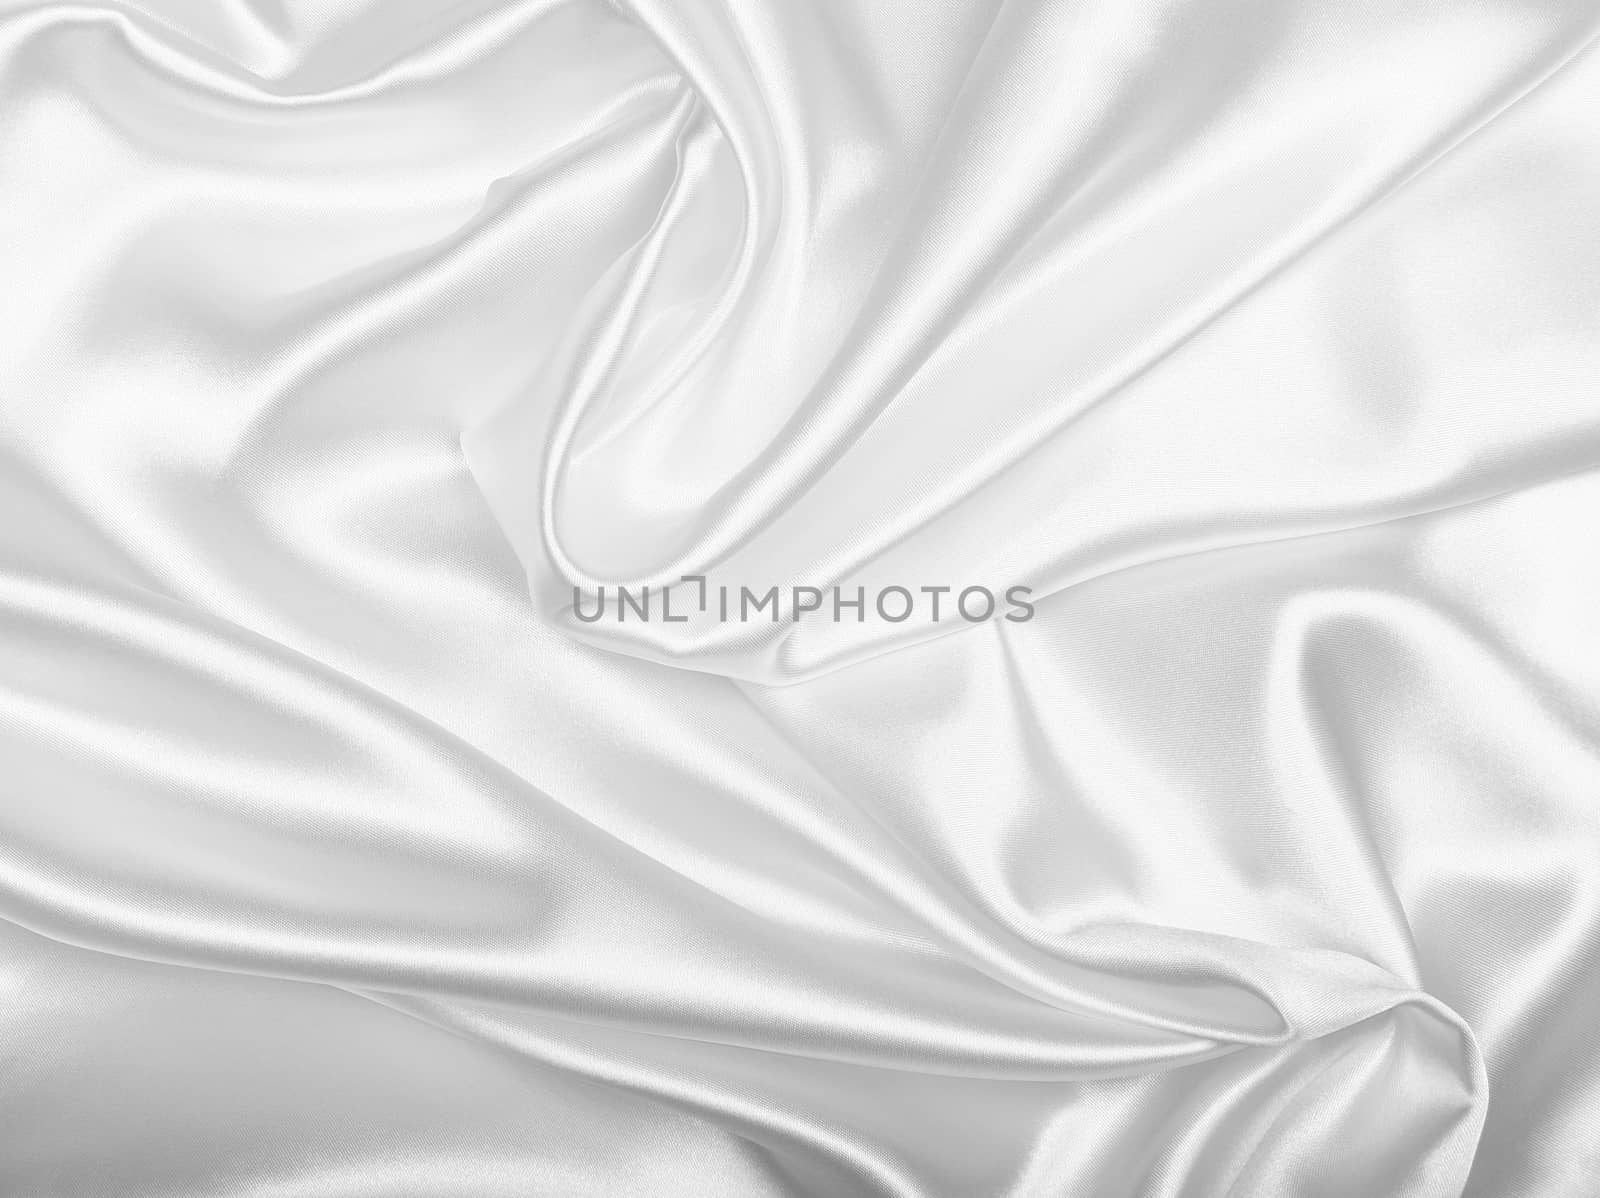 Smooth elegant white silk or satin as wedding background by oxanatravel